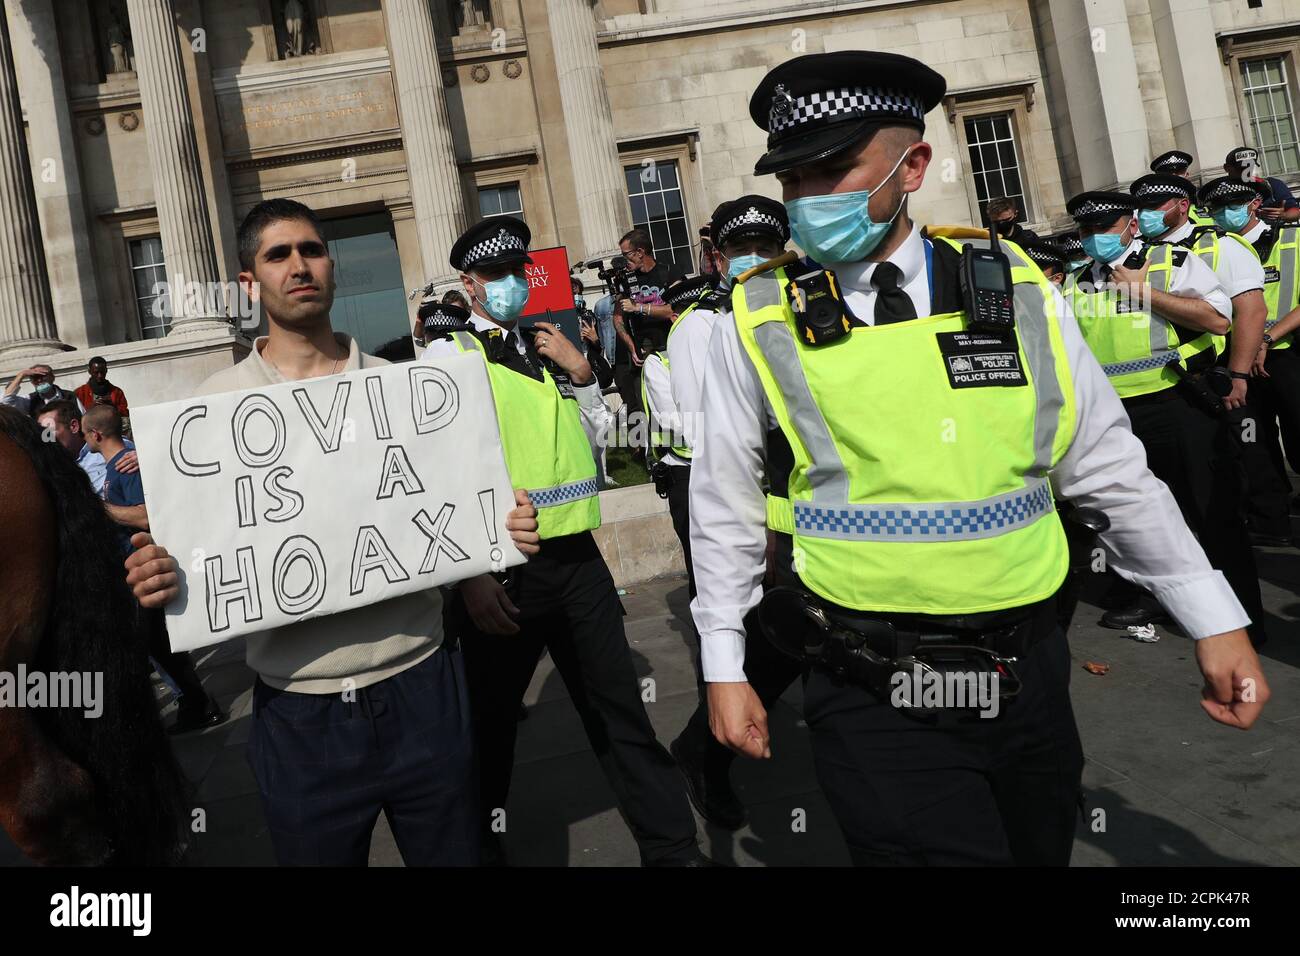 Police presence at an anti-vax protest in London's Trafalgar Square. Stock Photo